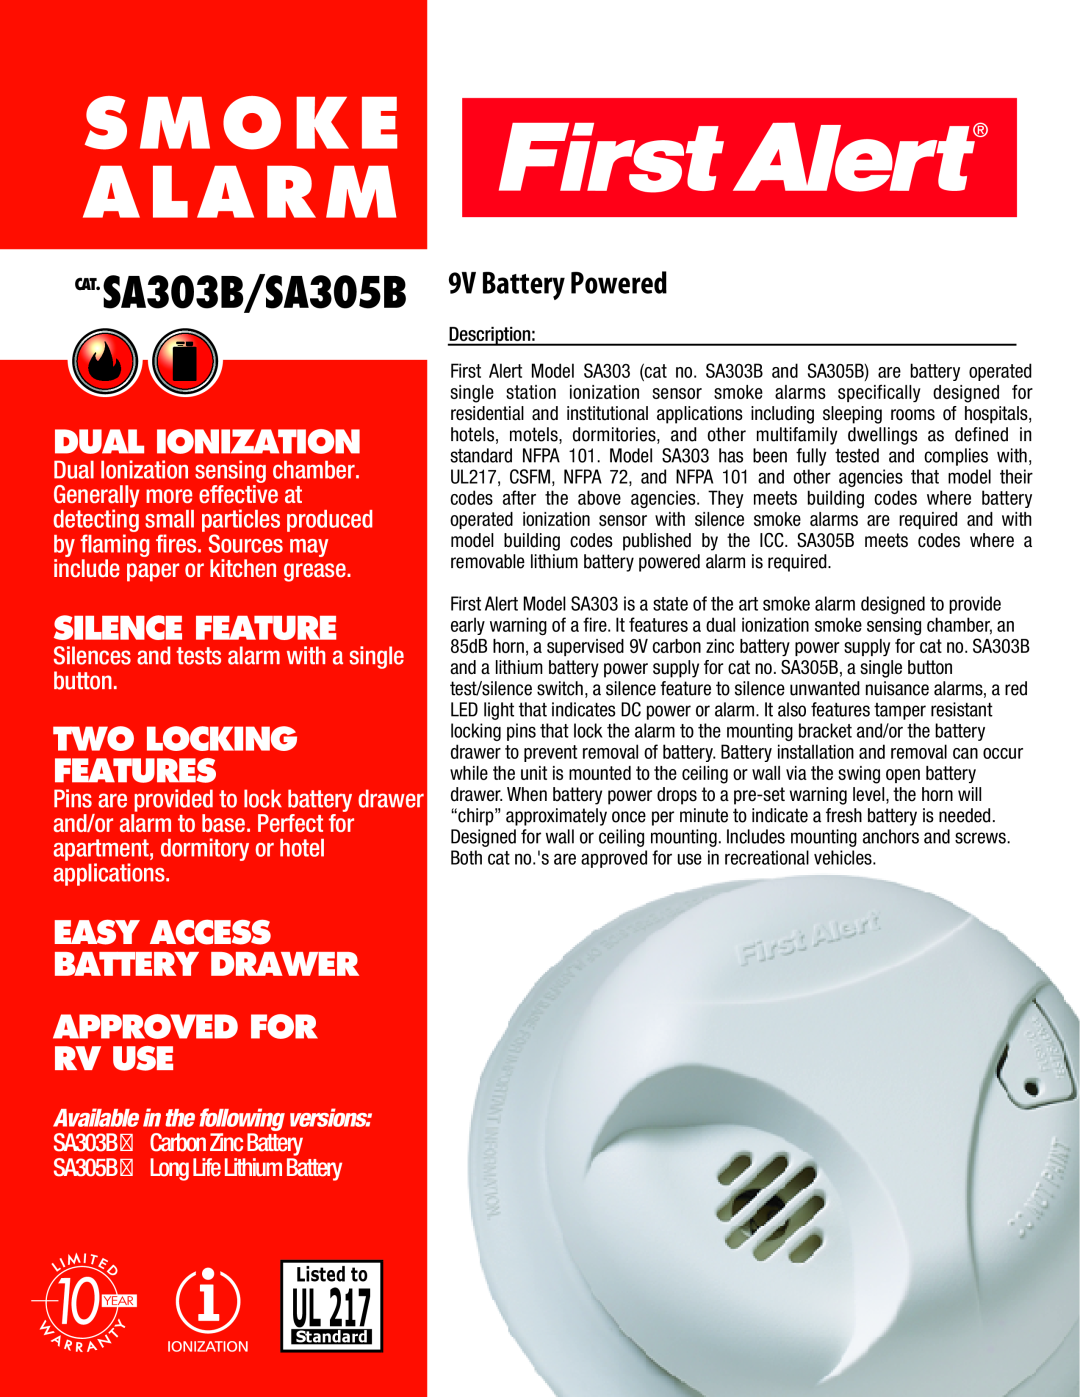 First Alert manual CAT.SA303B/SA305B, Description, Smoke Alarm, UL217, Dual Ionization, Silence Feature, Listed to 